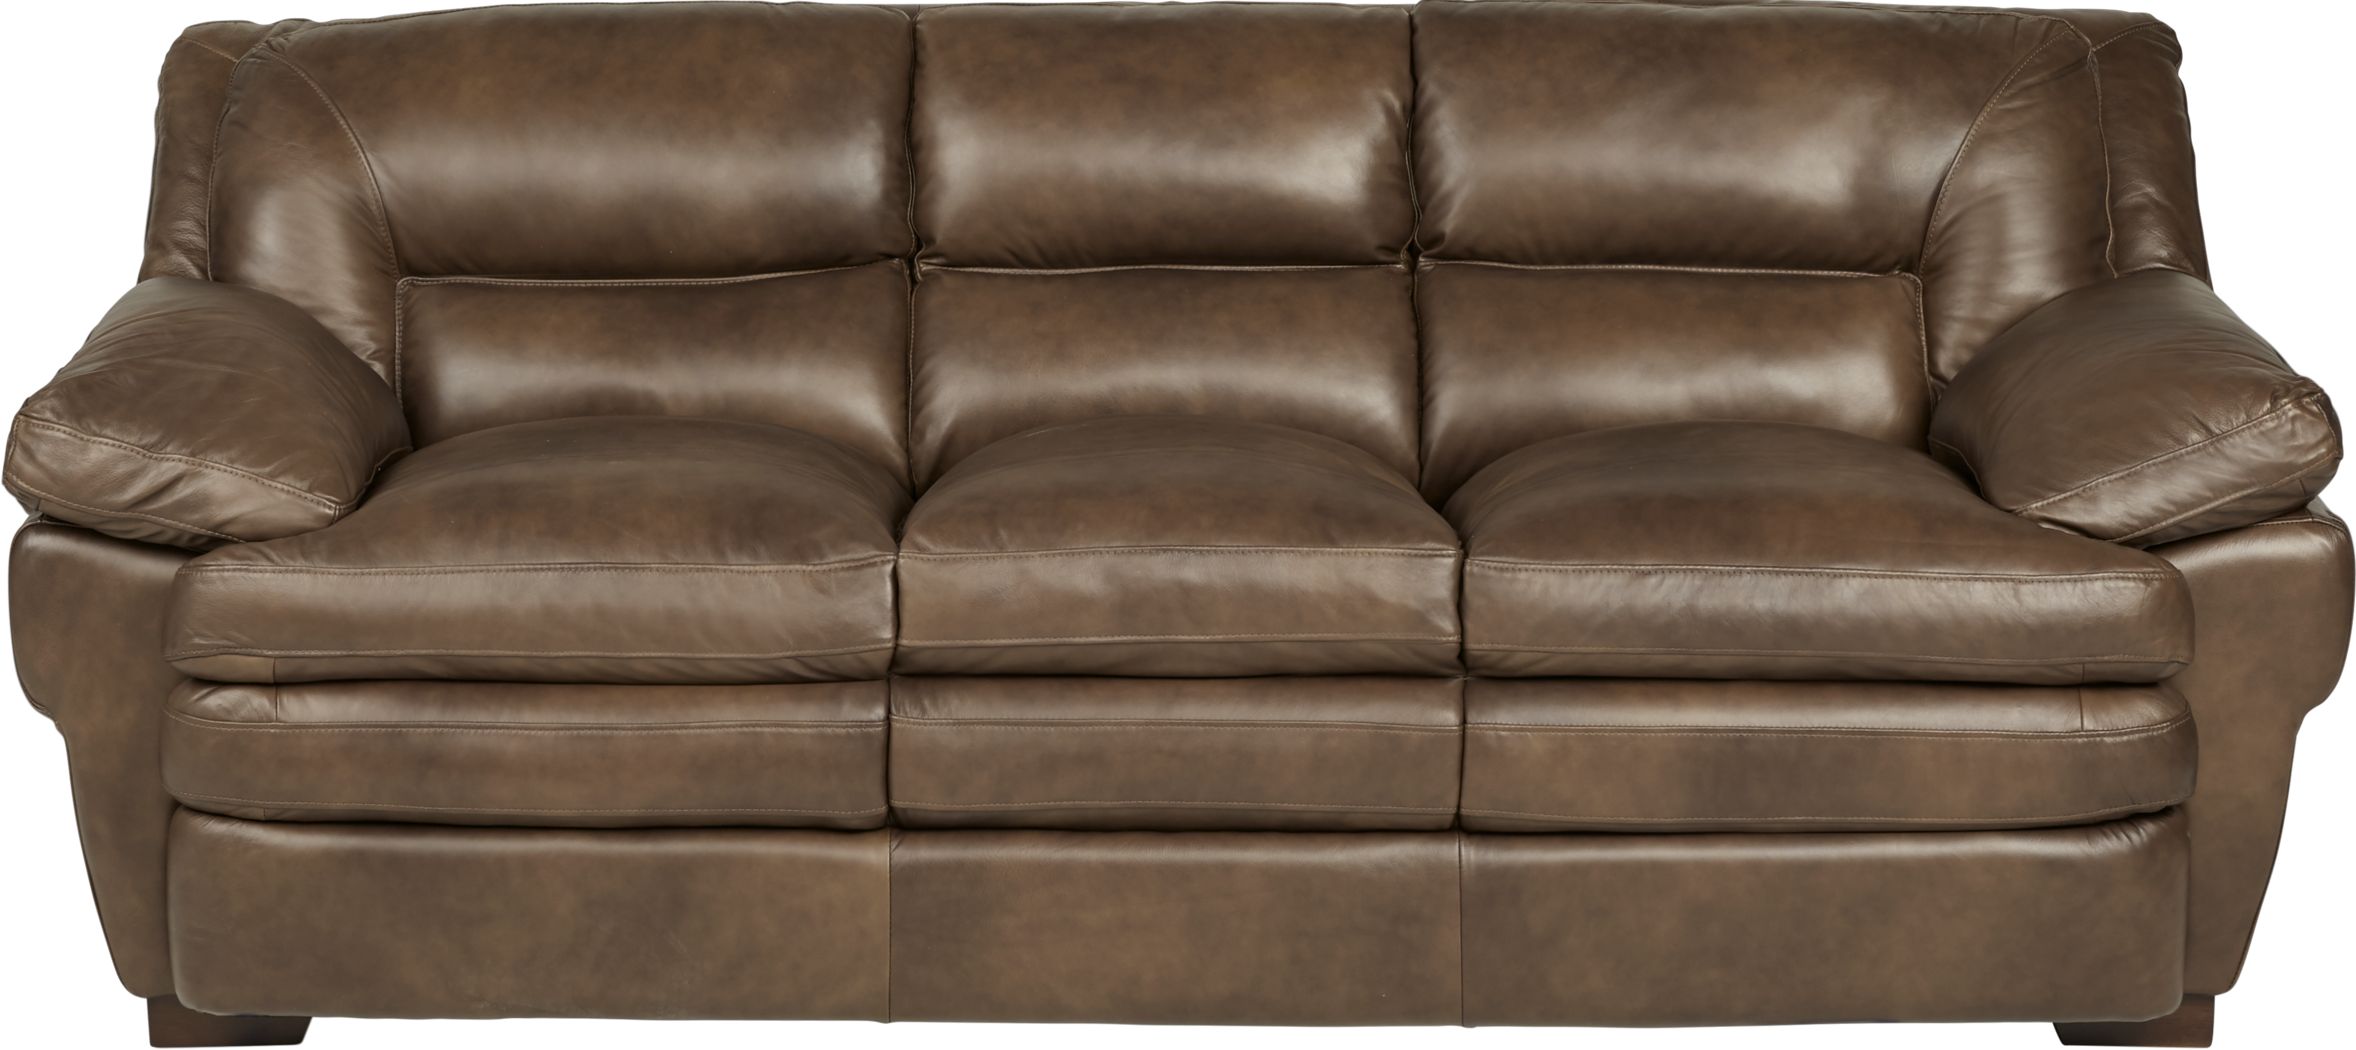 aventino leather sofa reviews